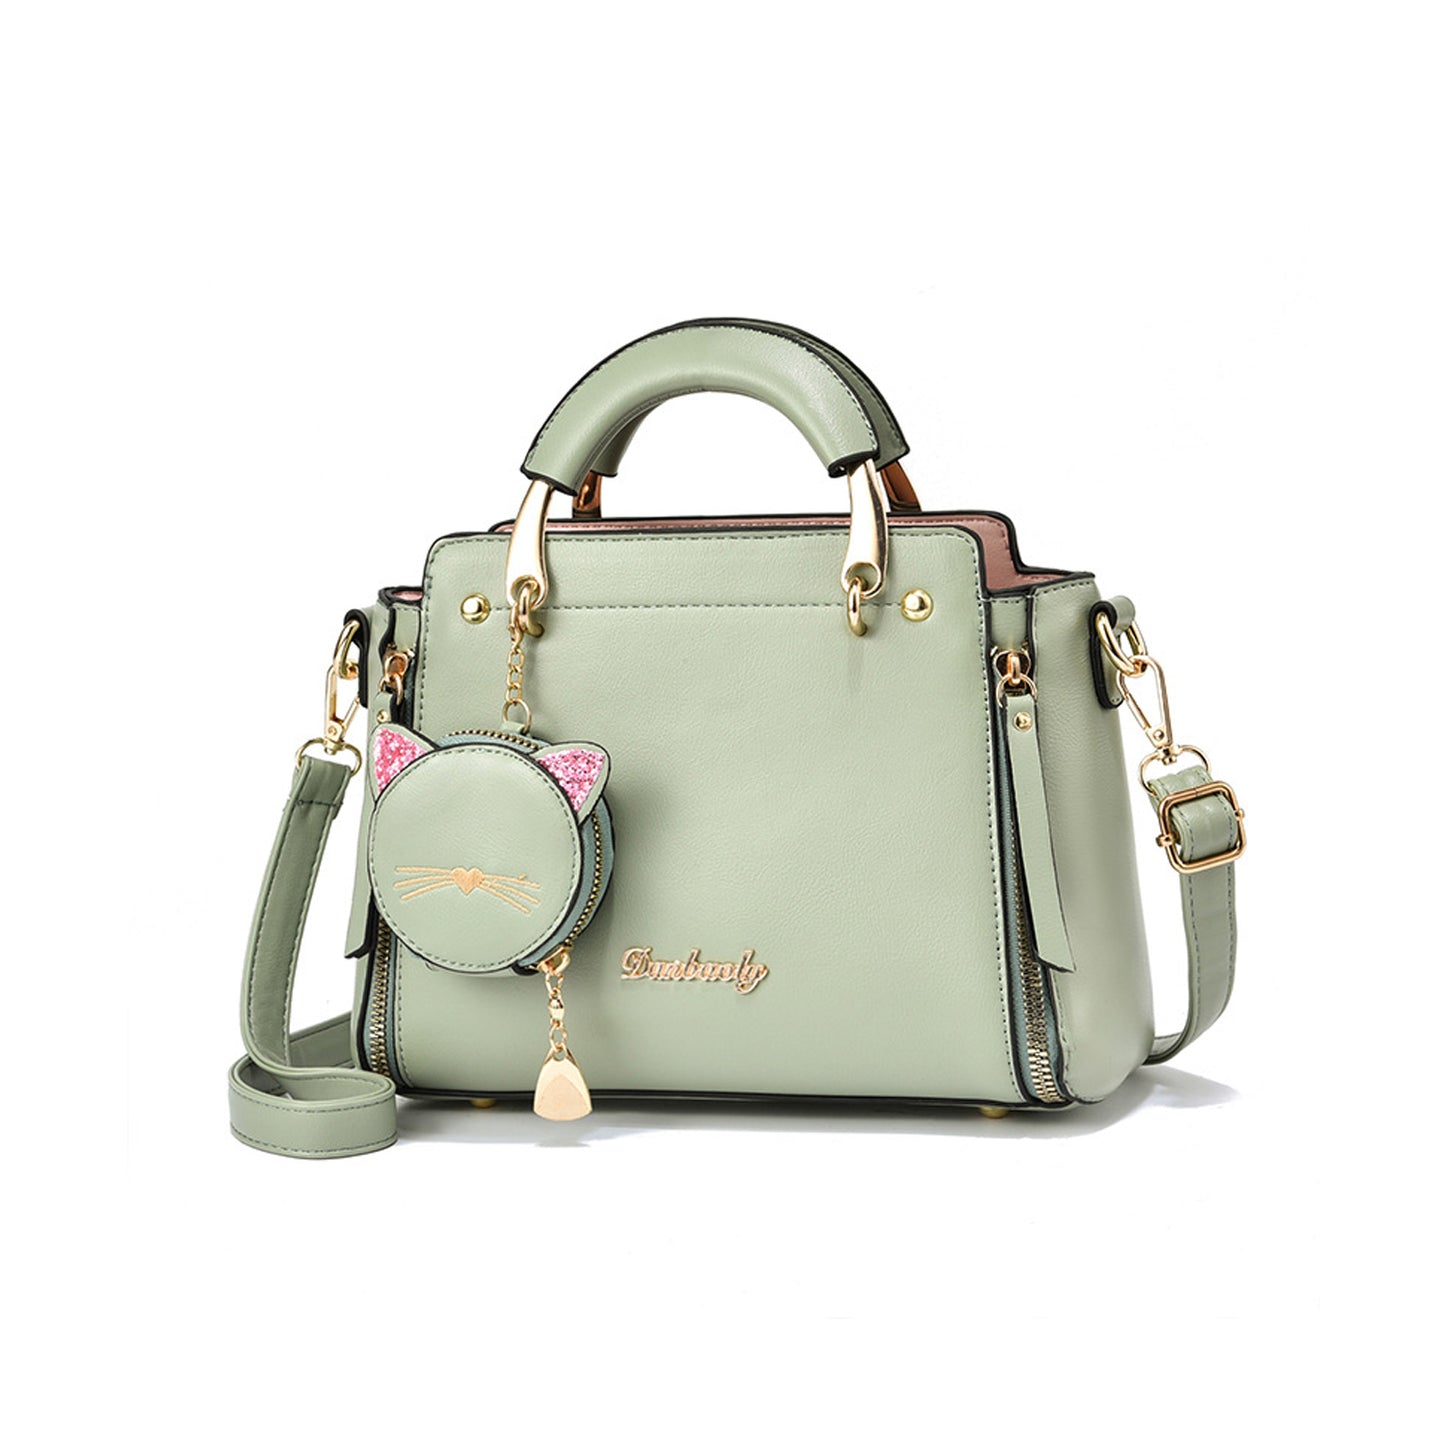 New Trendy Fashion Women's Handbag